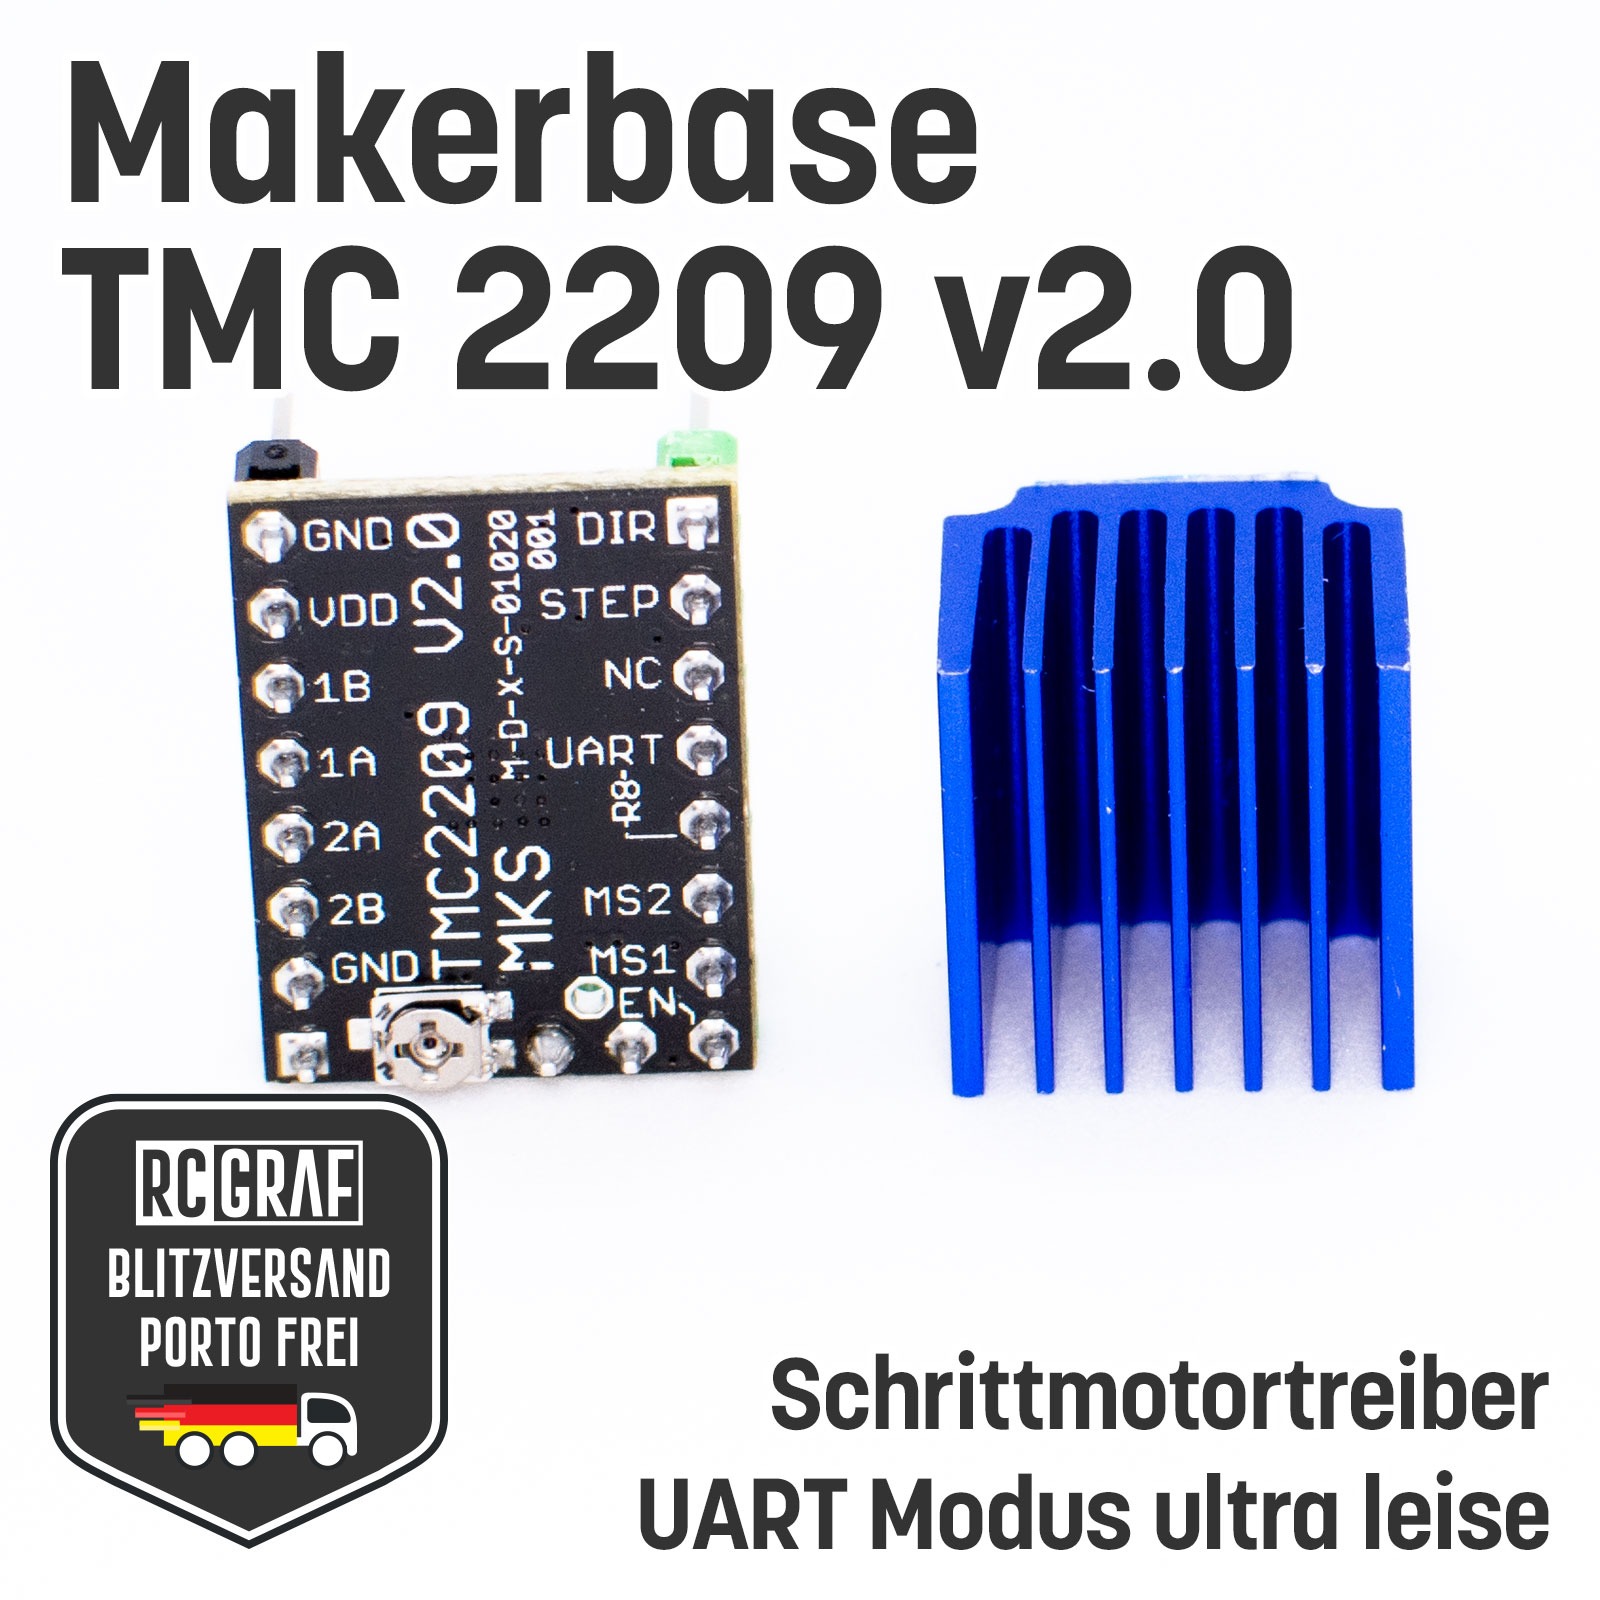 Makerbase TMC2209 V20 Schrittmotortreiber UART Modus ultra leise 2